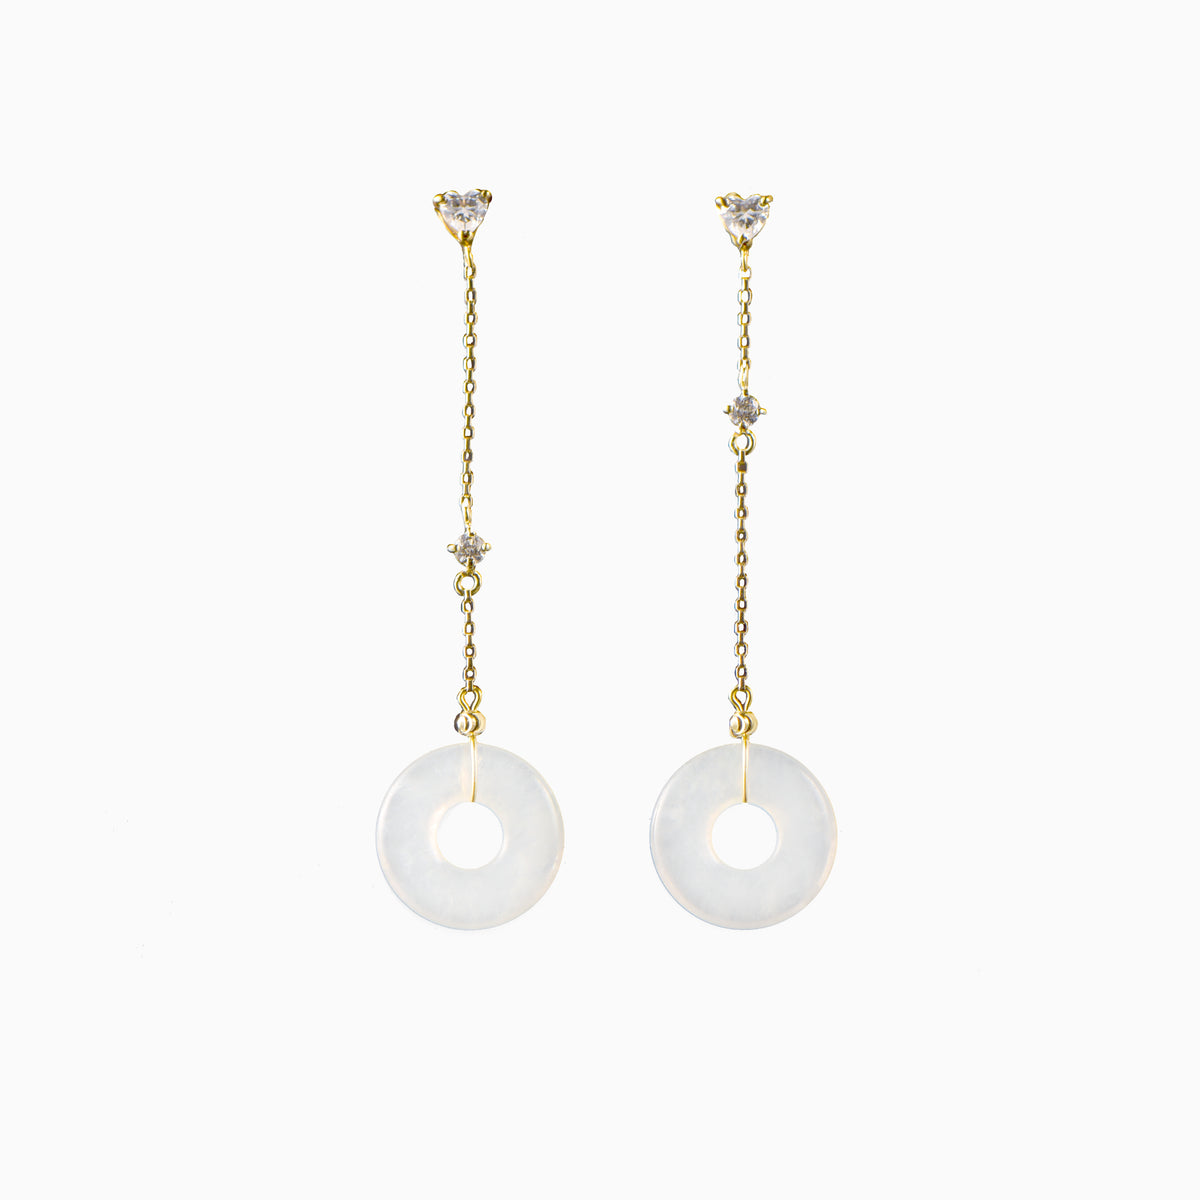 Pure white jade earrings with cool diamonds